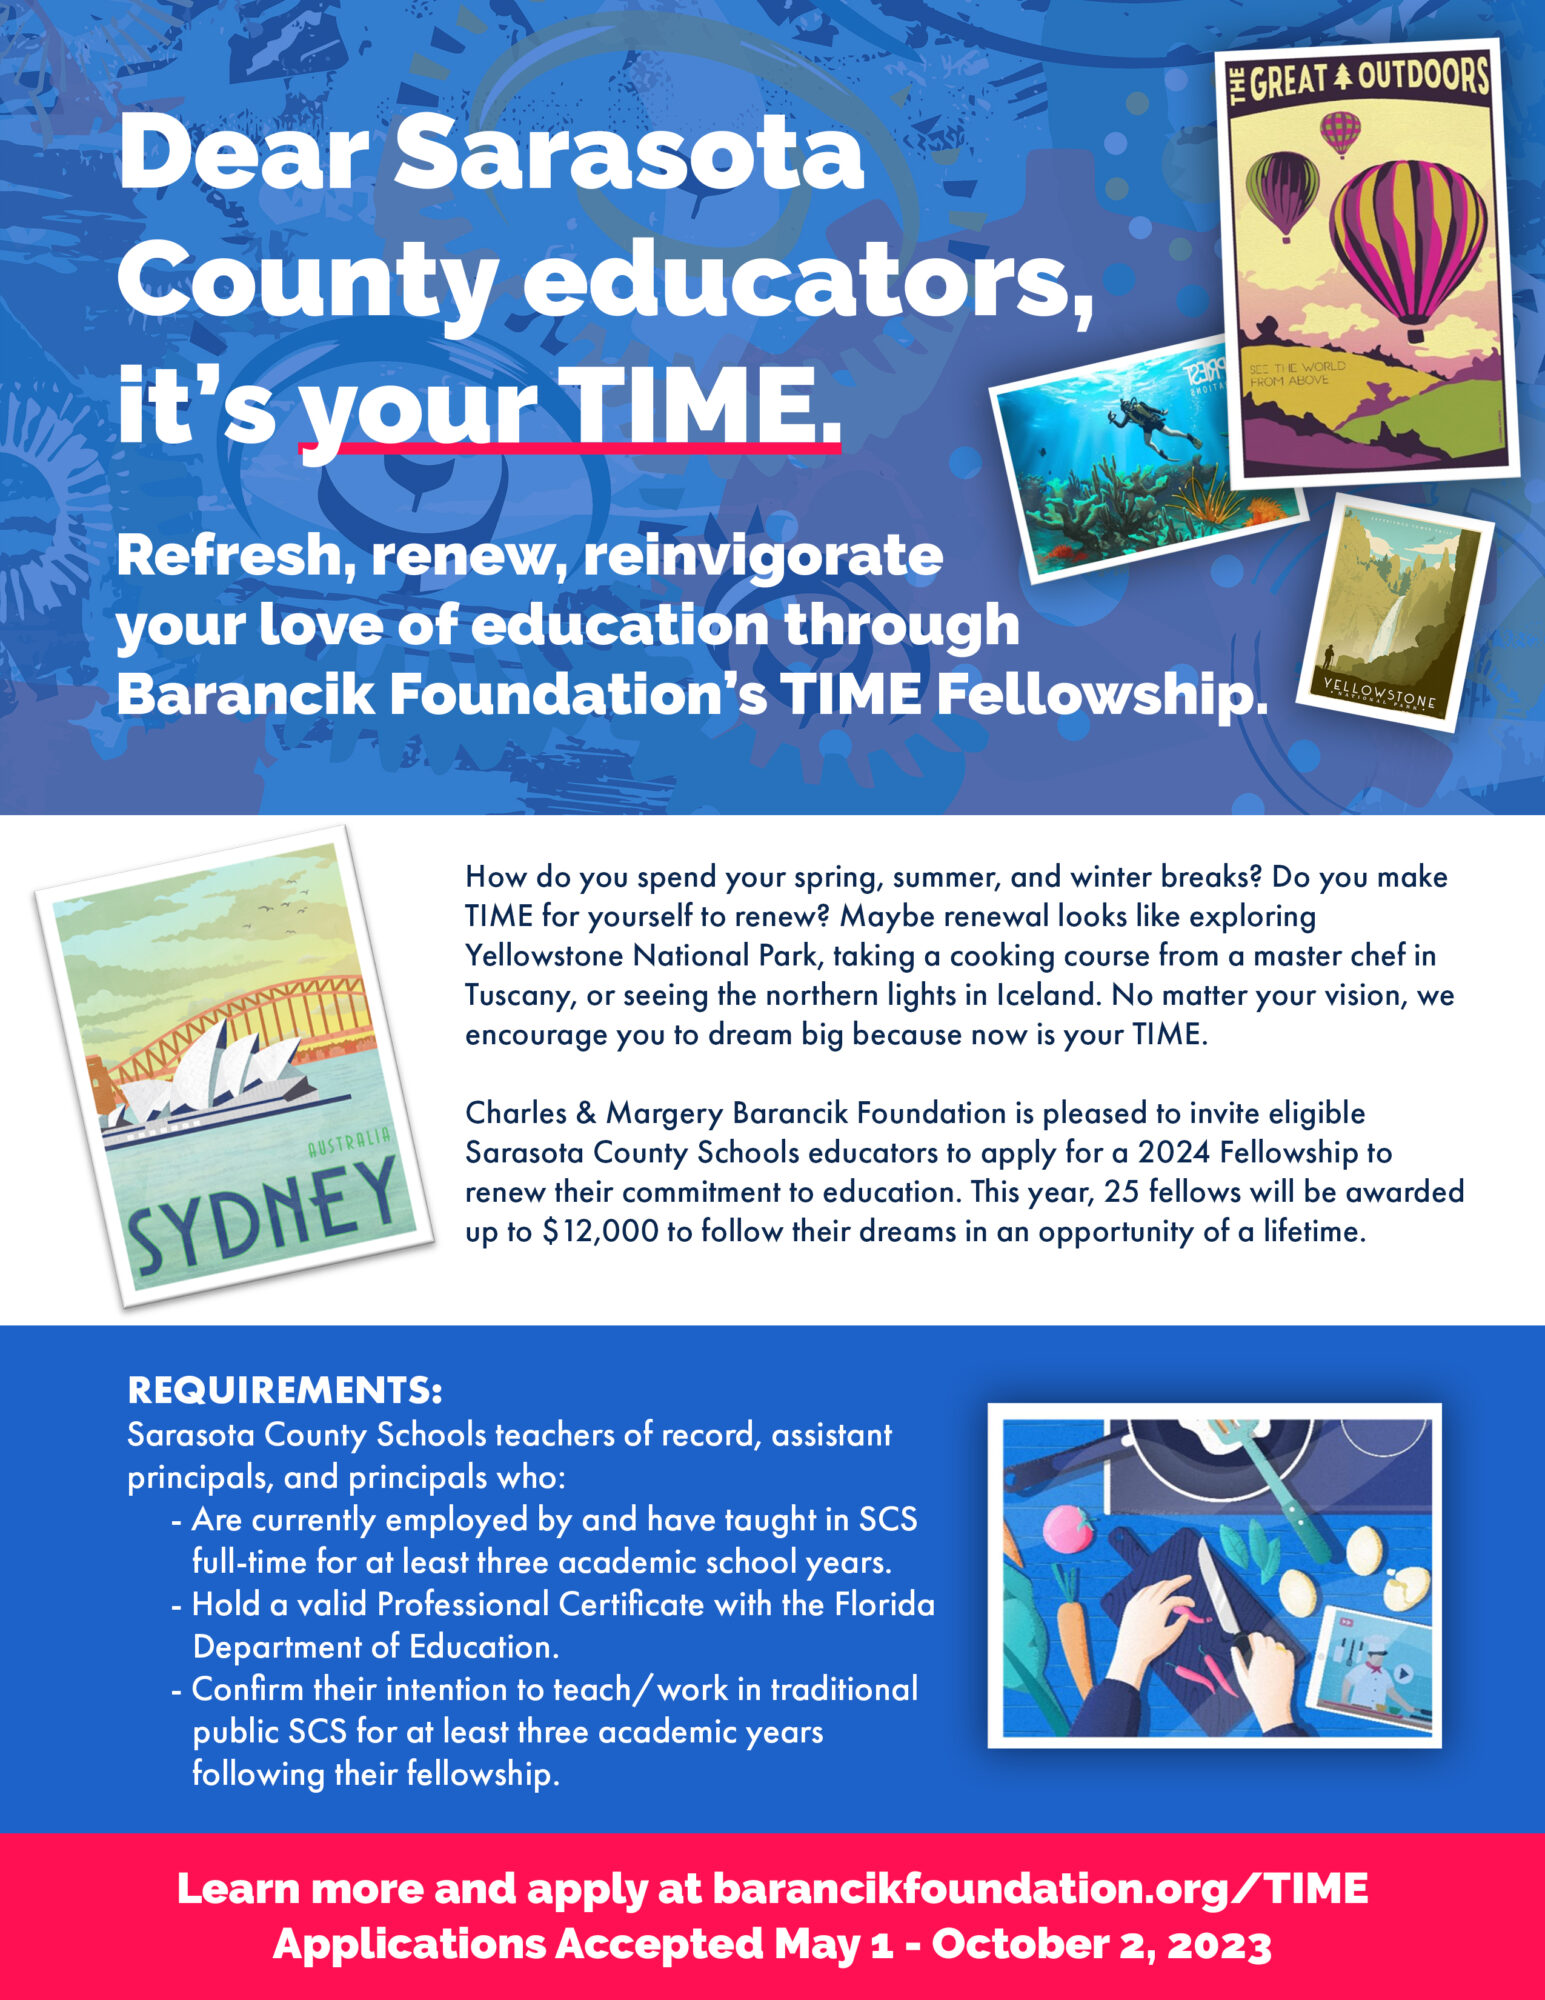 TIME Fellowship Barancik Foundation